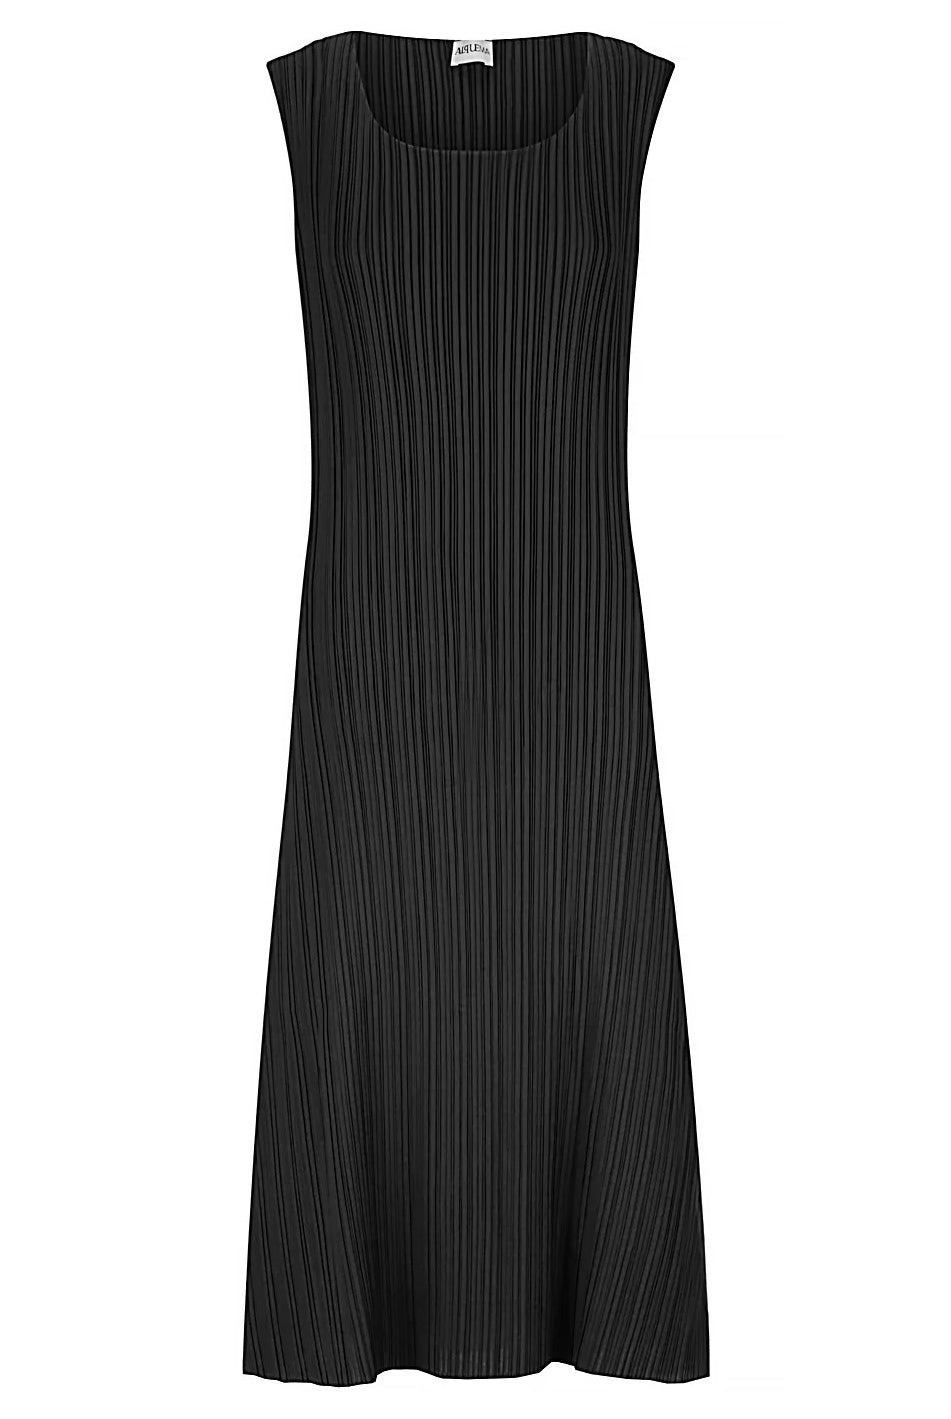 ALQUEMA - Luna Dress Black - Magpie Style